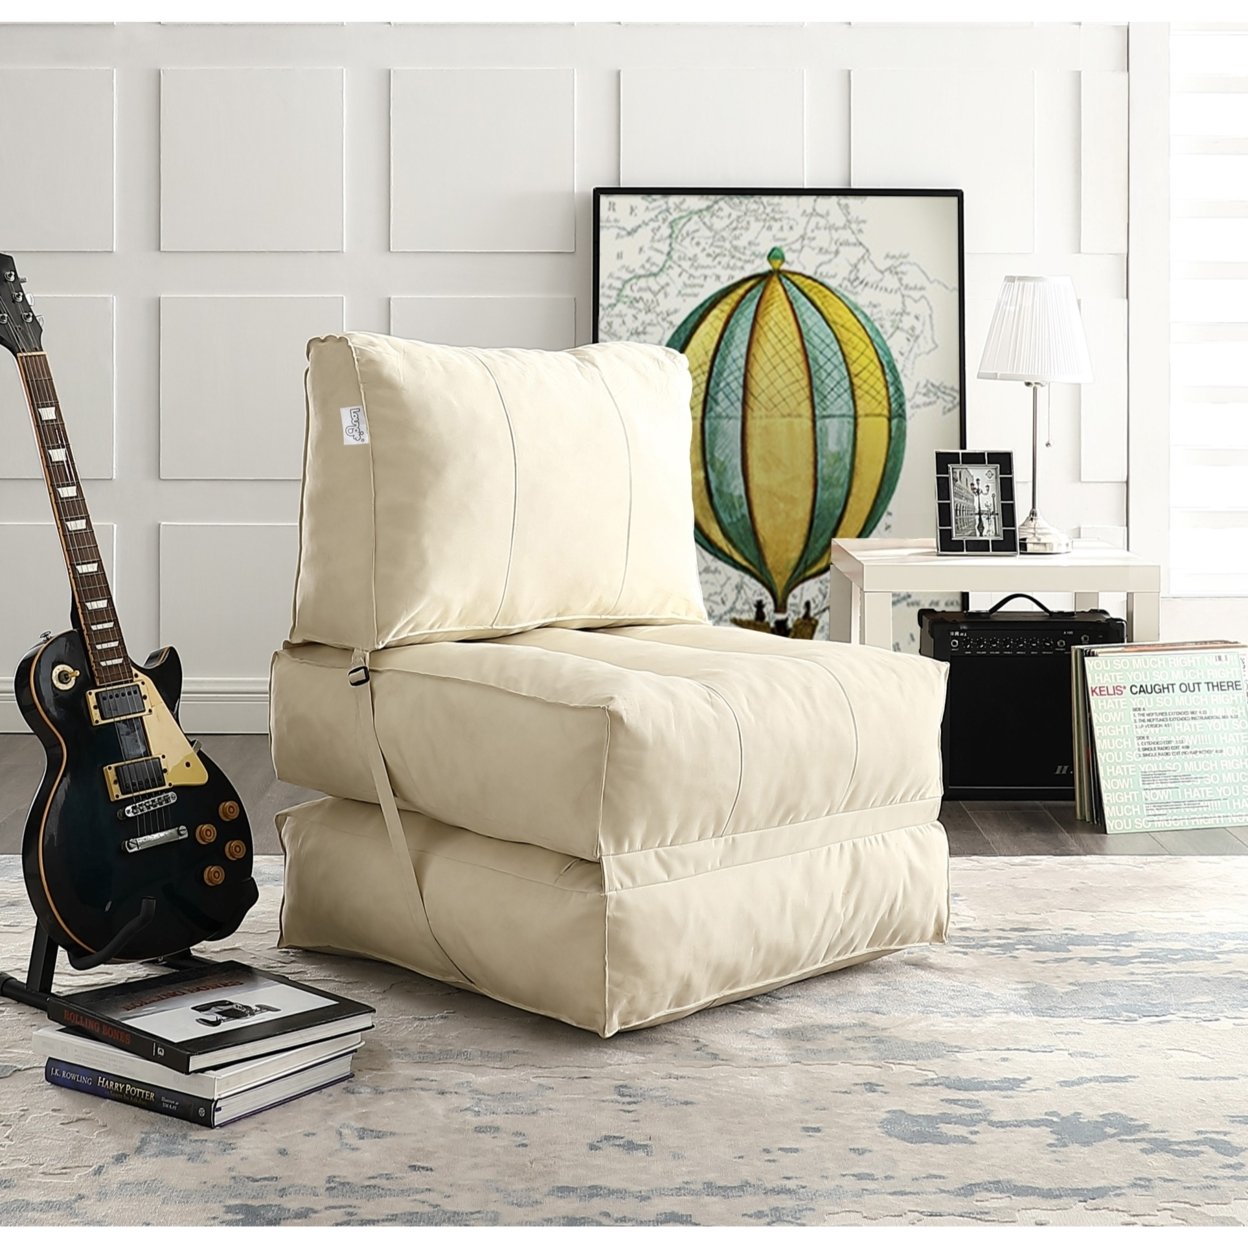 Loungie Cloudy Foam Lounge Chair-Convertible Bean Bag-Indoor- Outdoor-Self Expanding-Water Resistant - Beige